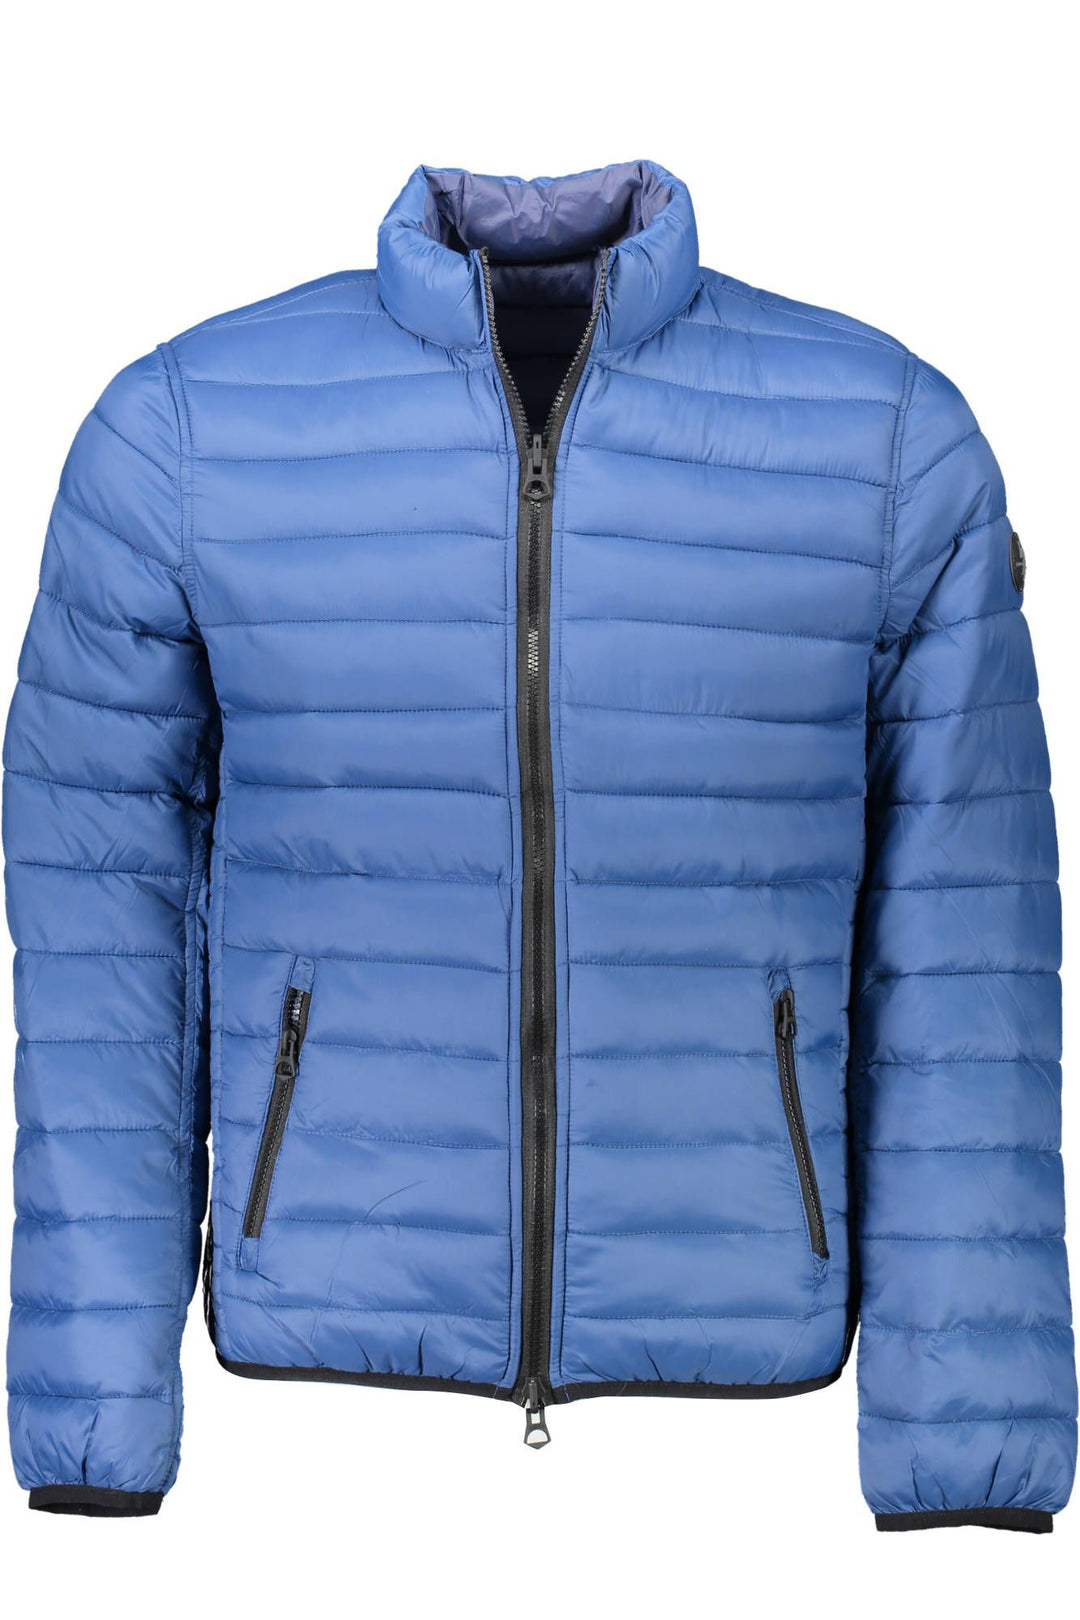 U.S. Polo Assn. Blue Nylon Jacket